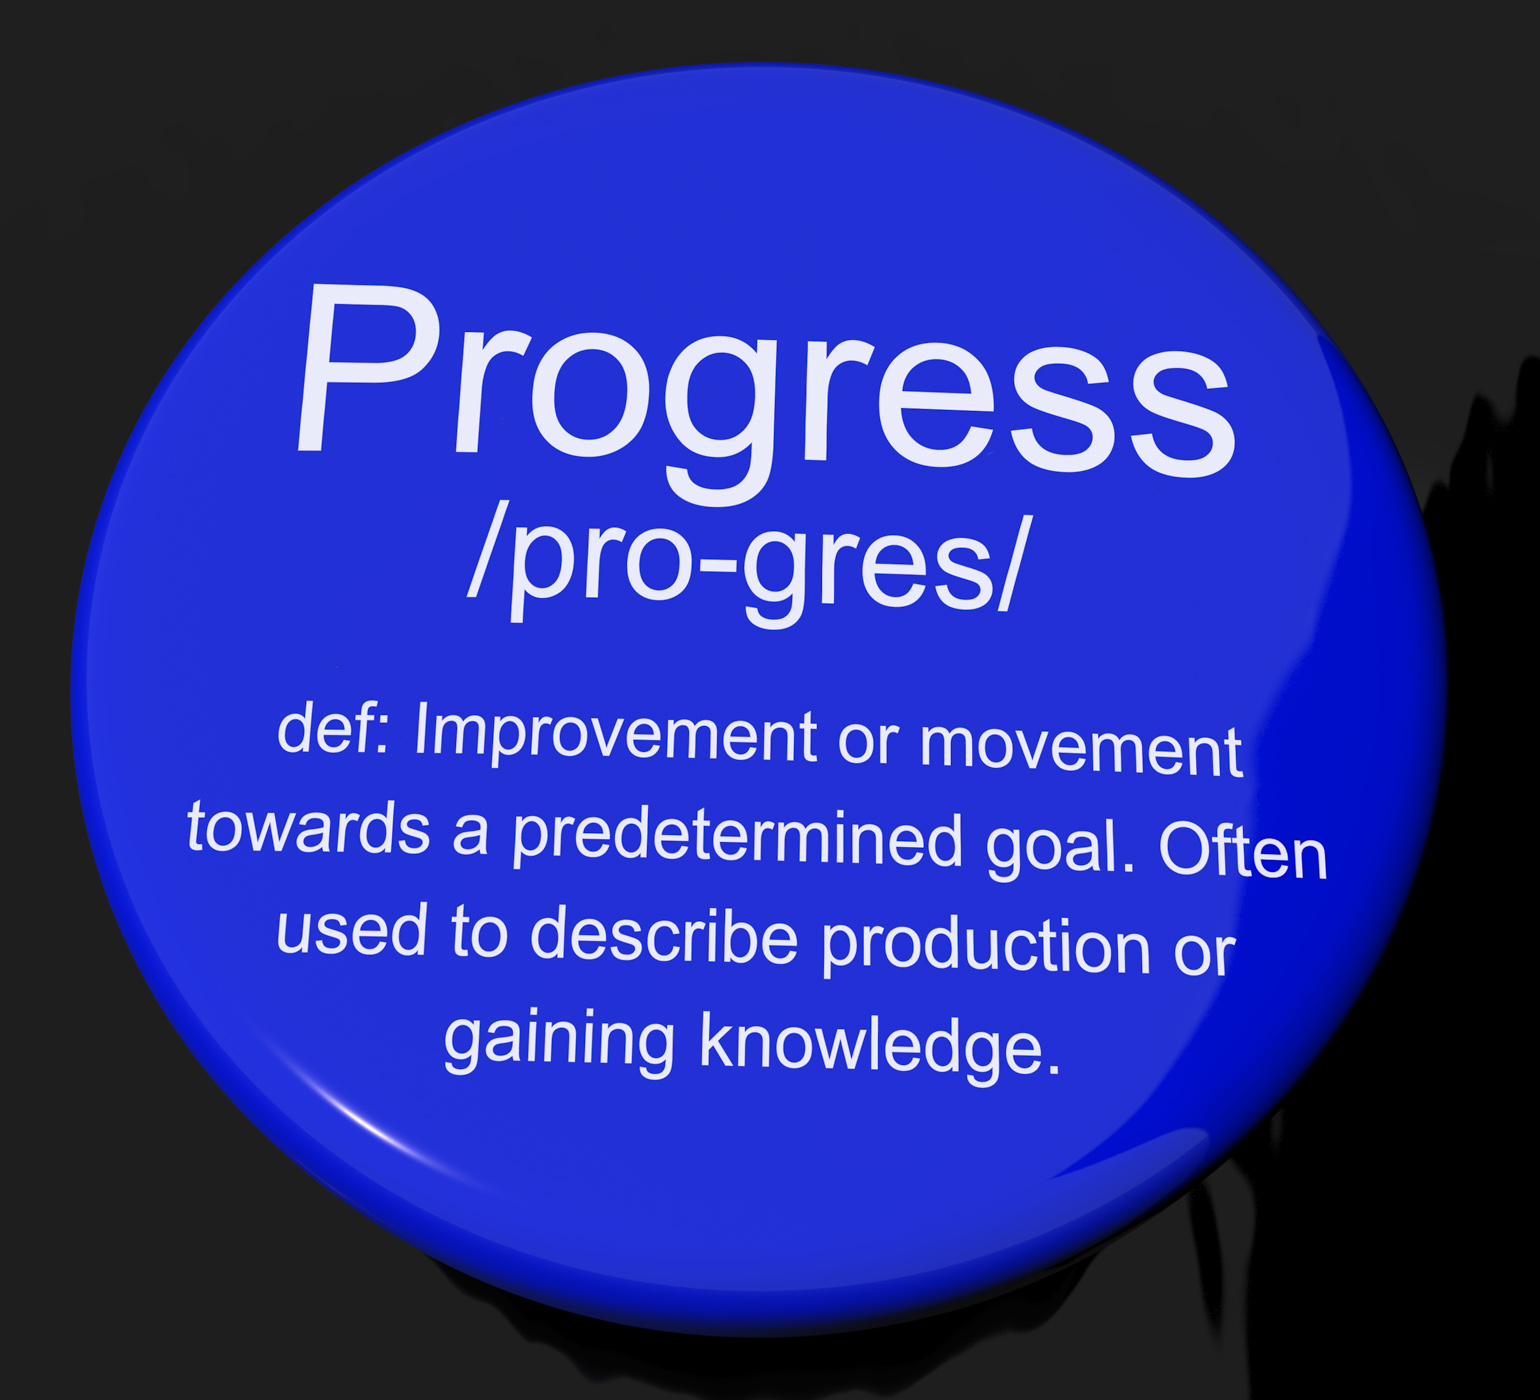 Progress definition button showing achievement growth and development photo